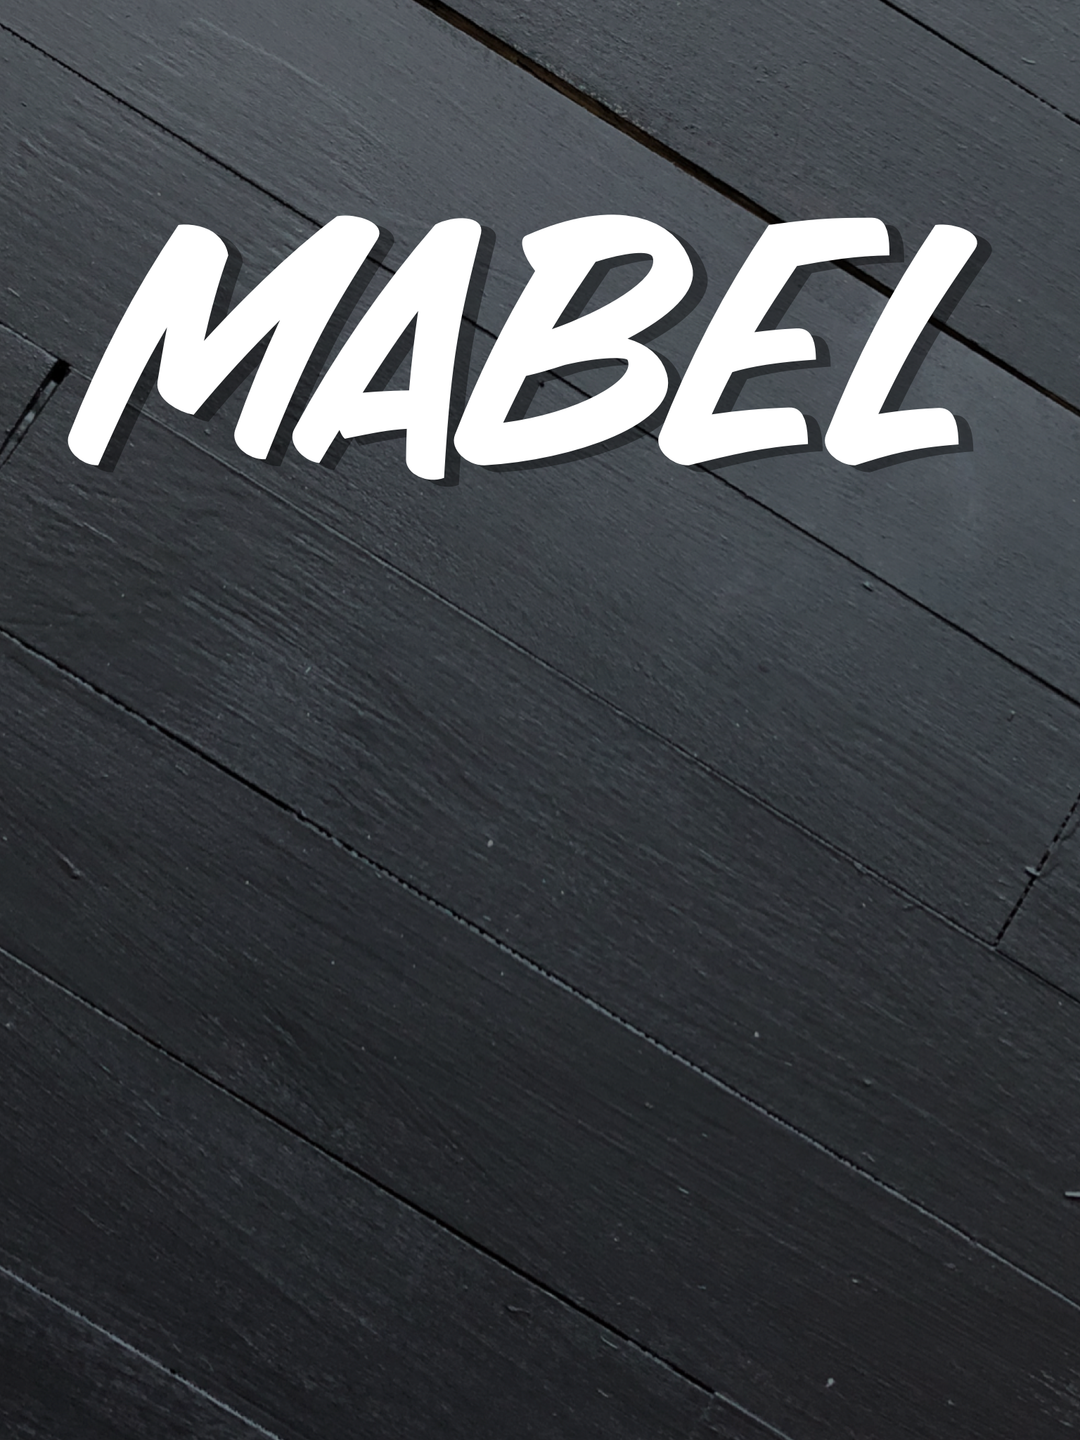 Mabel Diecut // Cast Gift